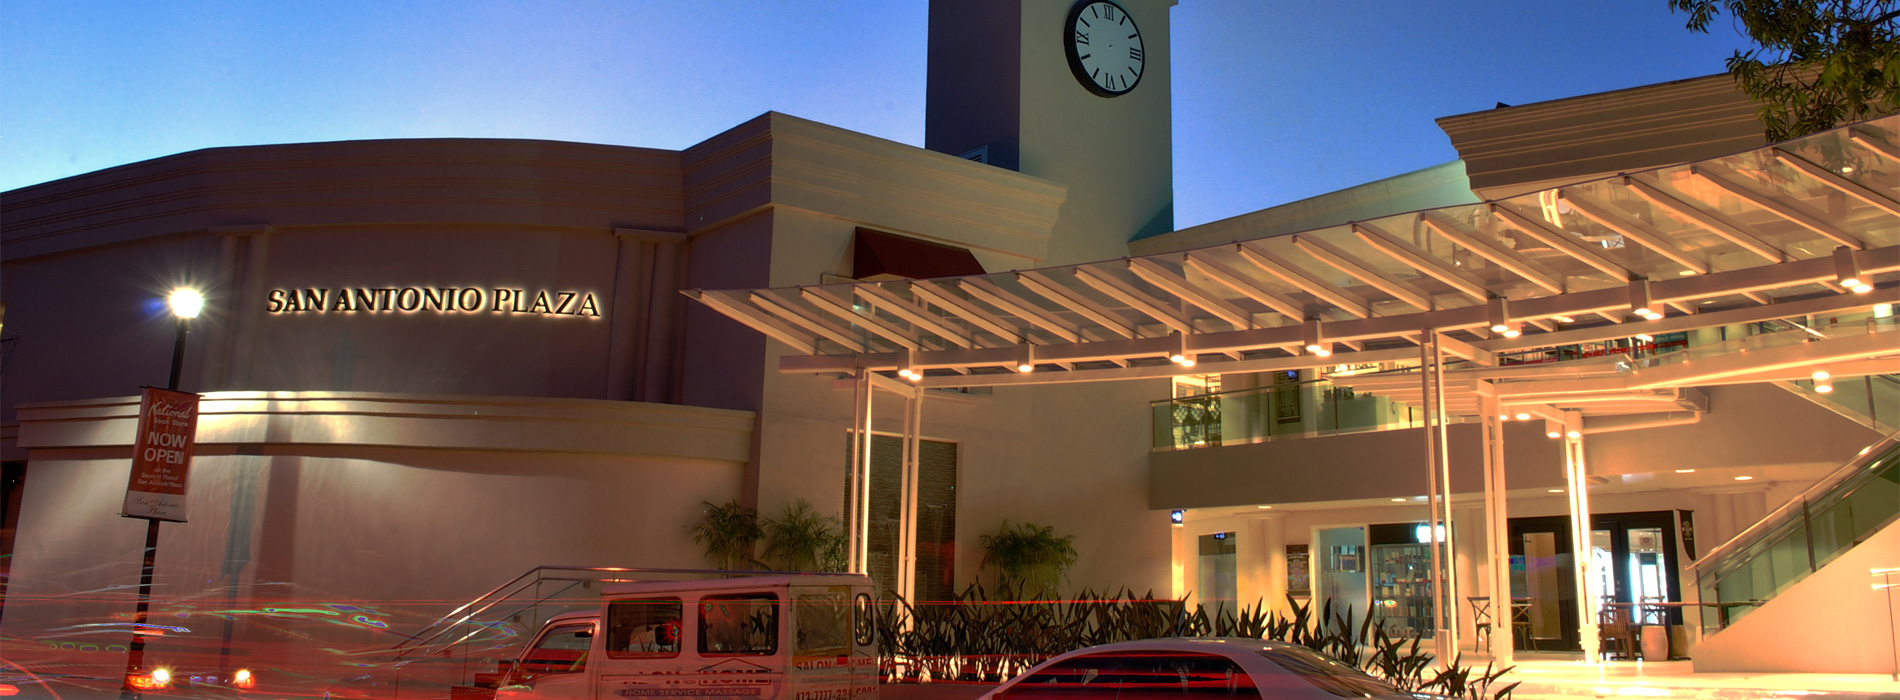 San Antonio Plaza | Project | RCHITECTS, Inc. | Architectural Firm Philippines